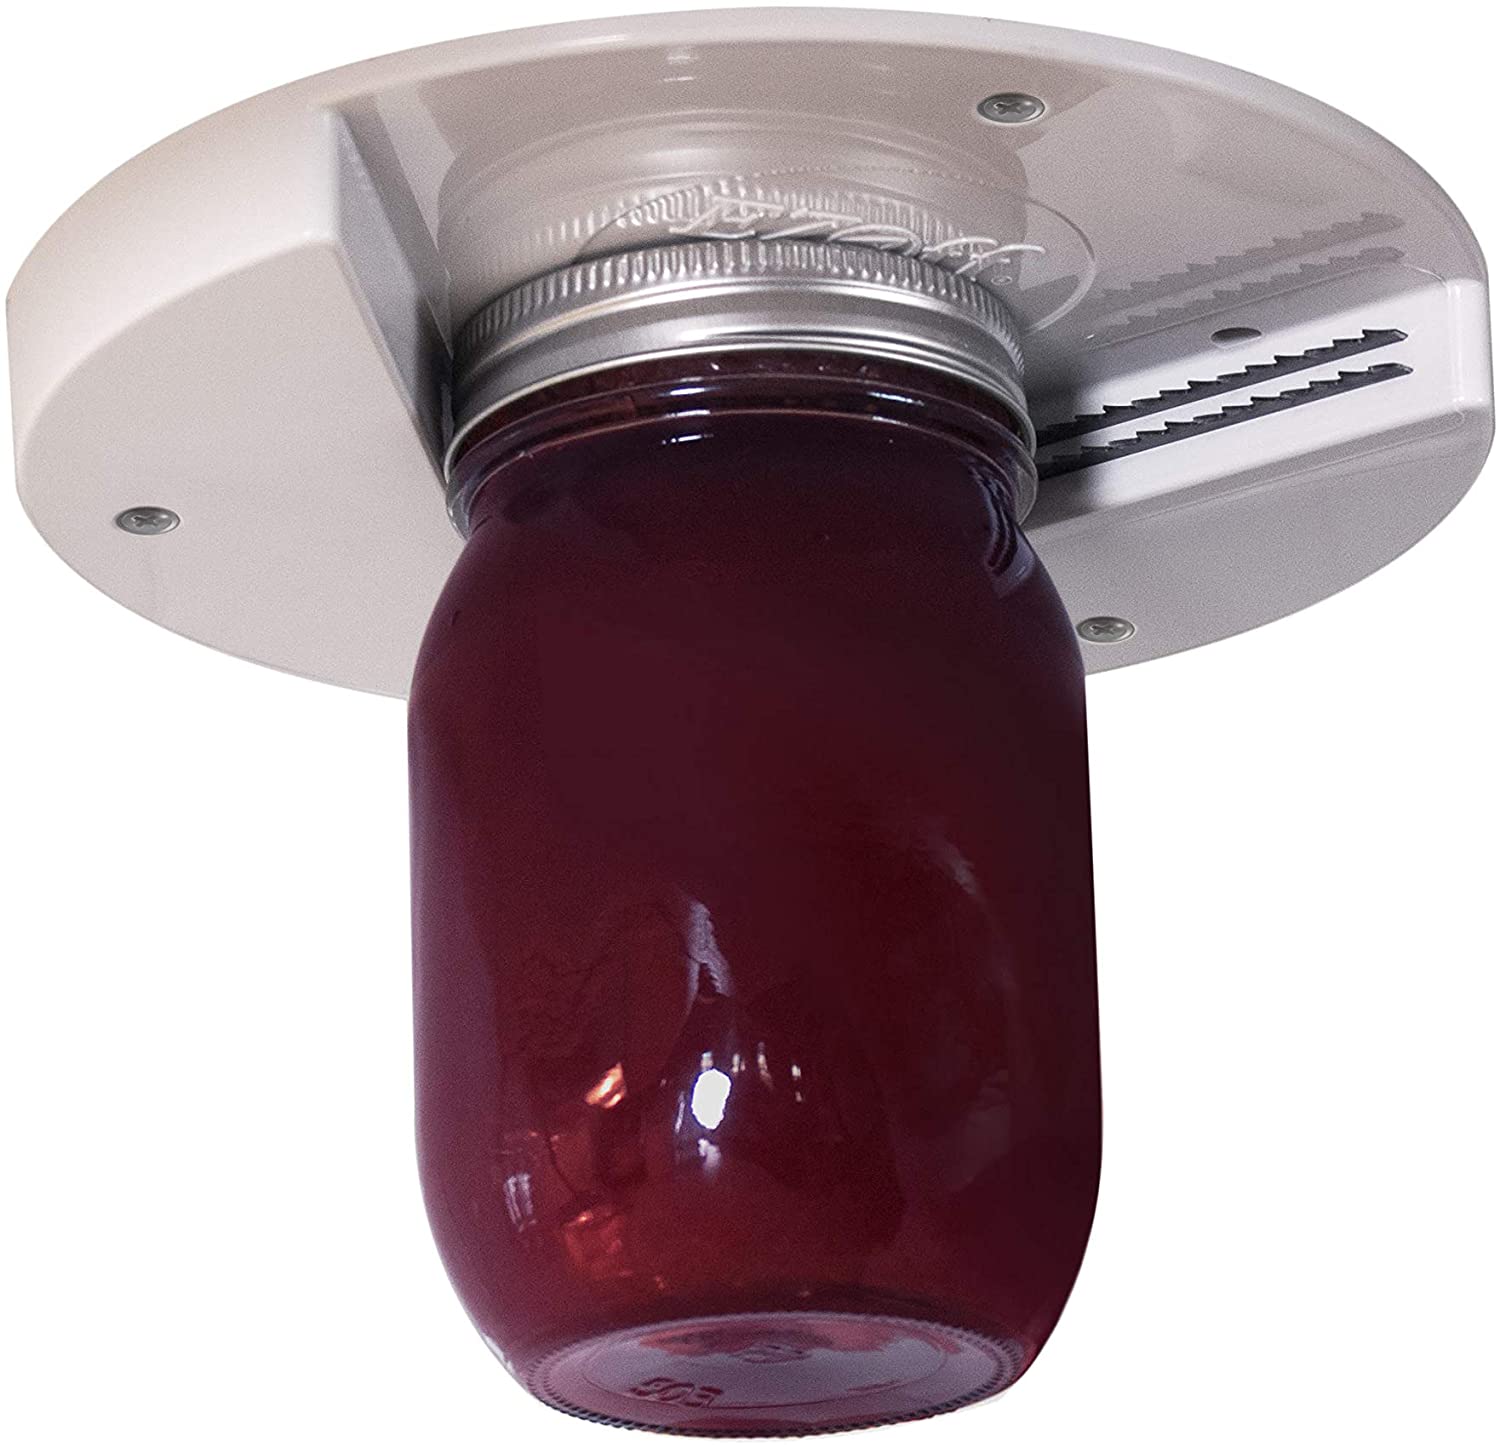 Kichwit Adjustable Jar Opener for Arthritis, All Metal Construction, Easily  Opens 3/8 to 4 Jar and Bottle Lids, Free Bonus Bottle Opener Keychain